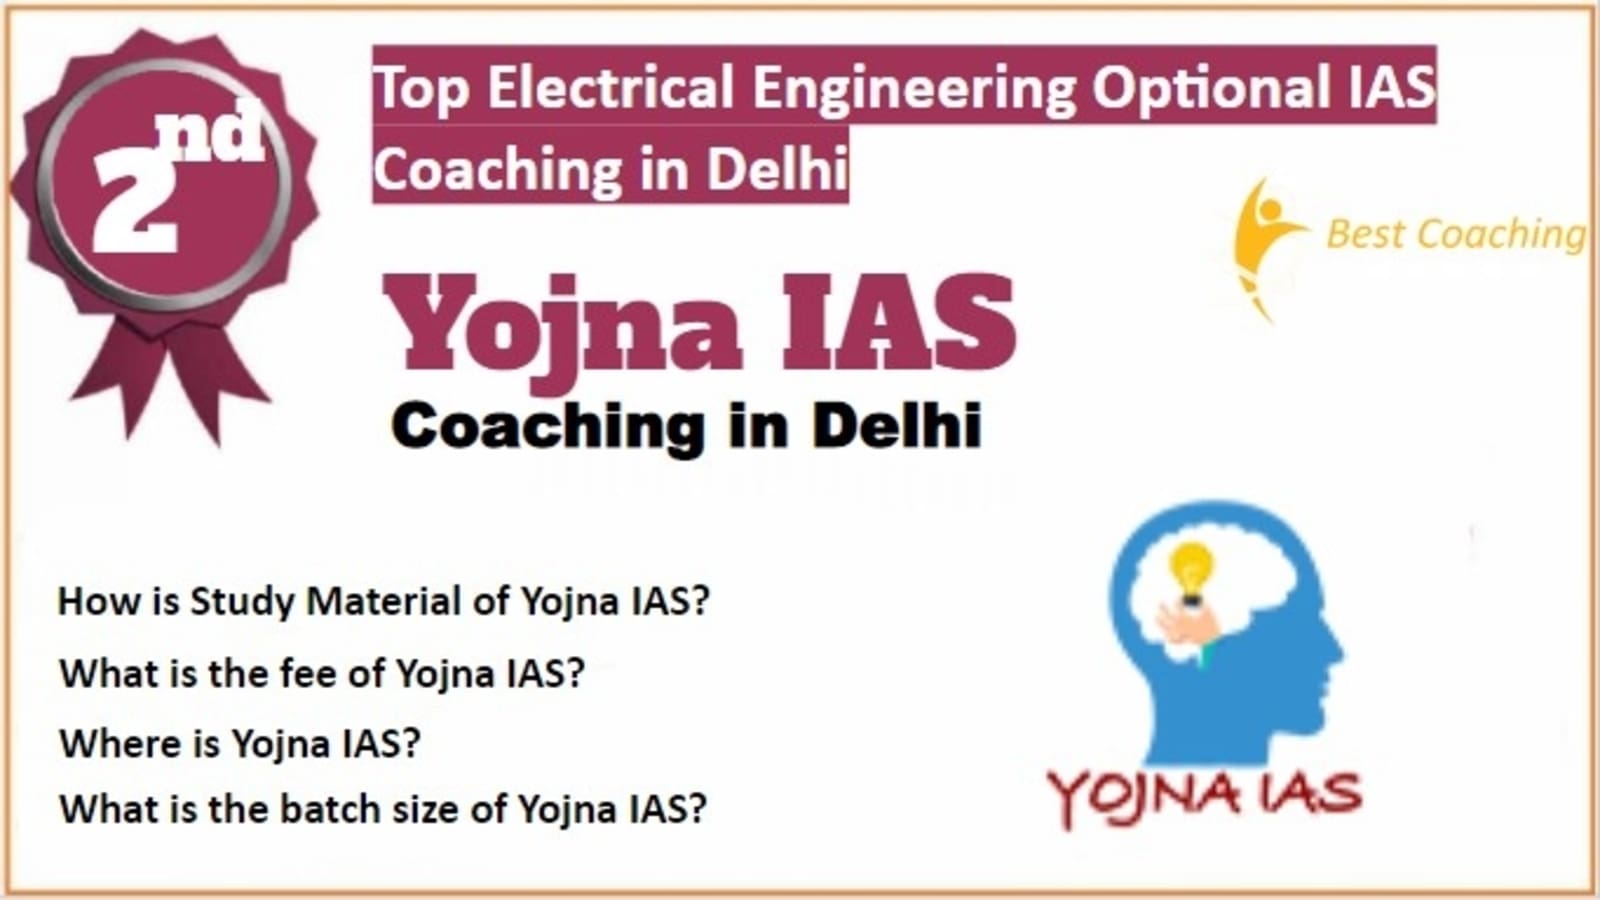 Rank 2 Best Electrical Engineering Optional IAS Coaching in Delhi